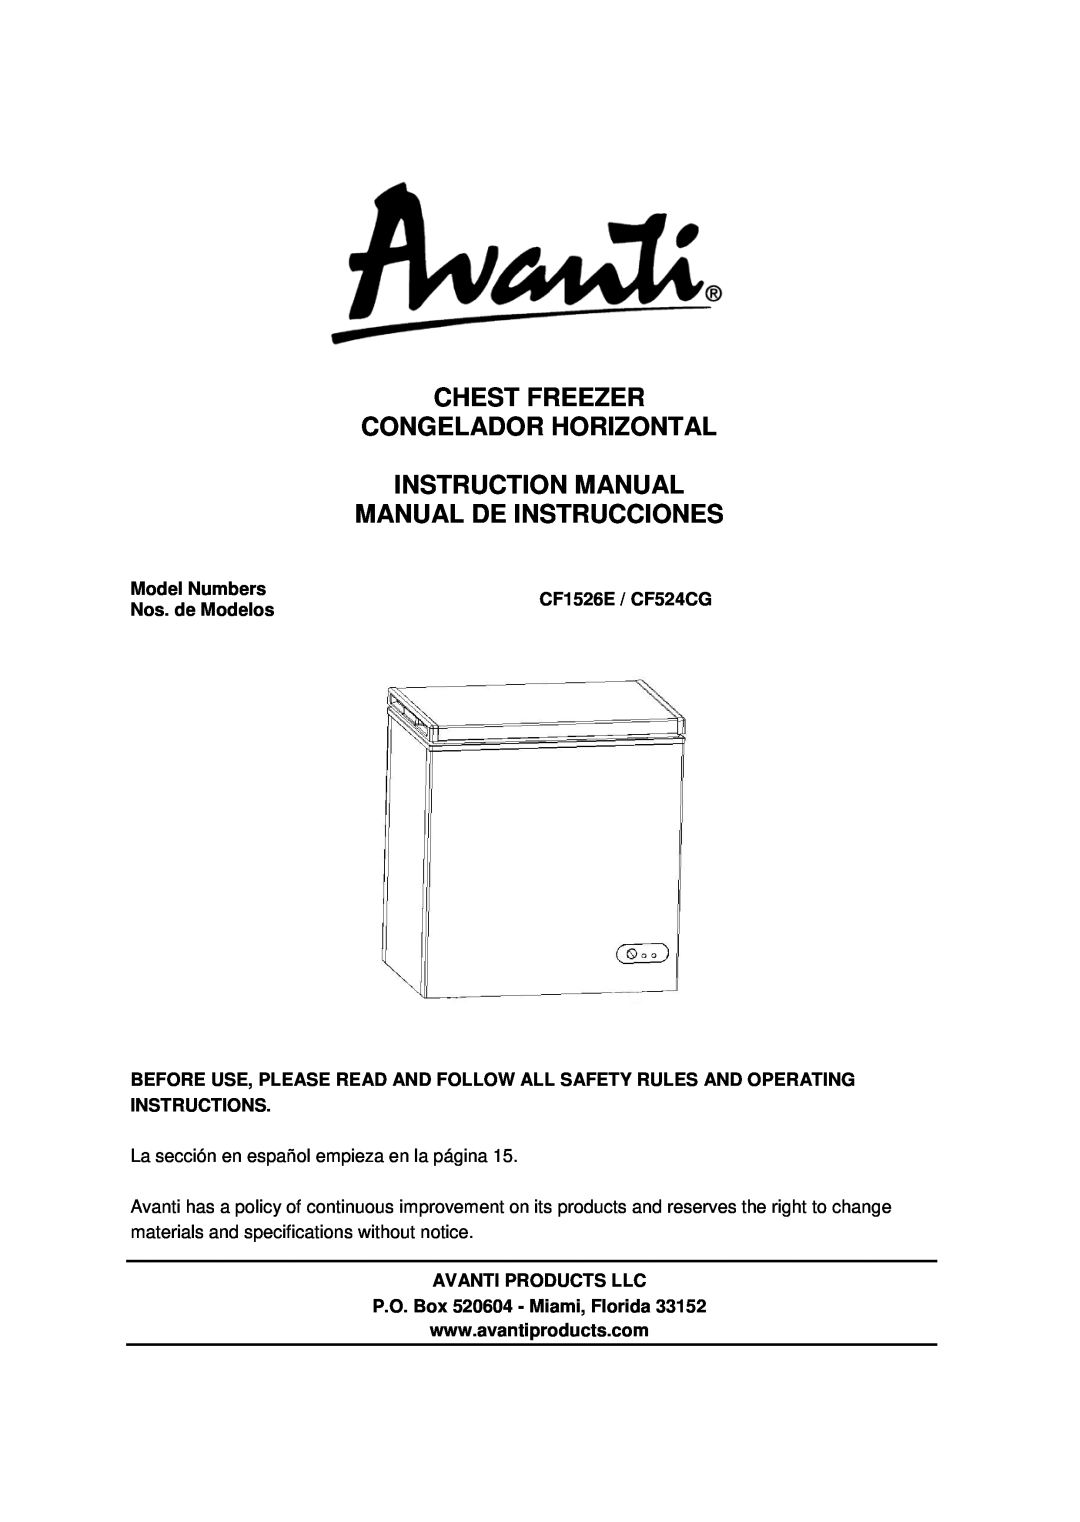 Avanti cf524cg instruction manual Chest Freezer Congelador Horizontal, Model Numbers, CF524CG, Nos. de Modelos 